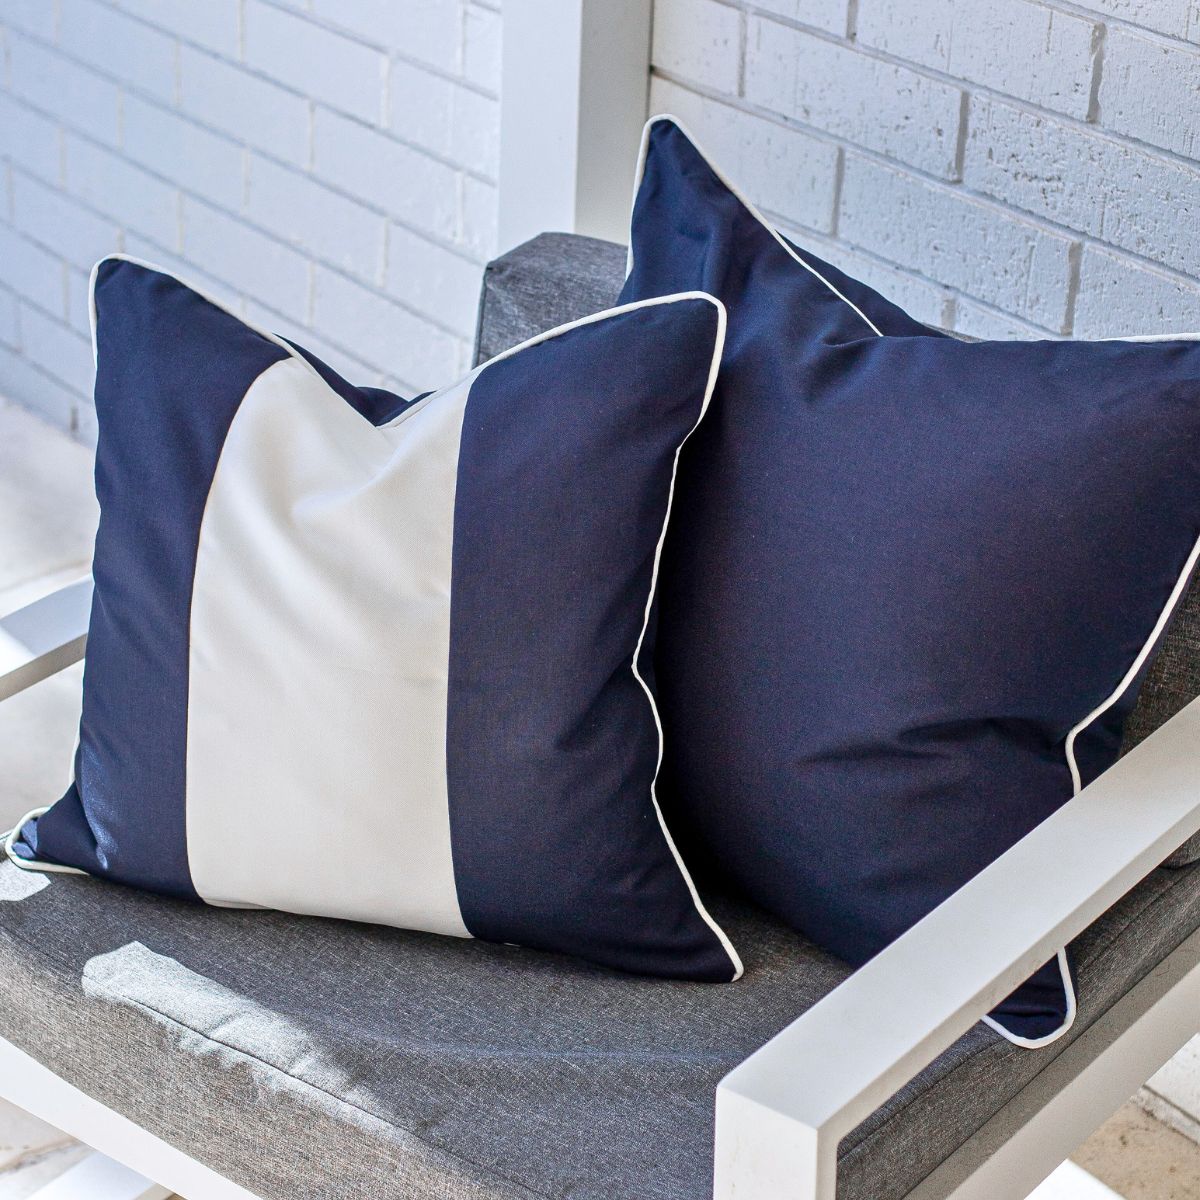 KIRRA Dark Blue Striped Outdoor Cushion Cover | Mirage Haven  